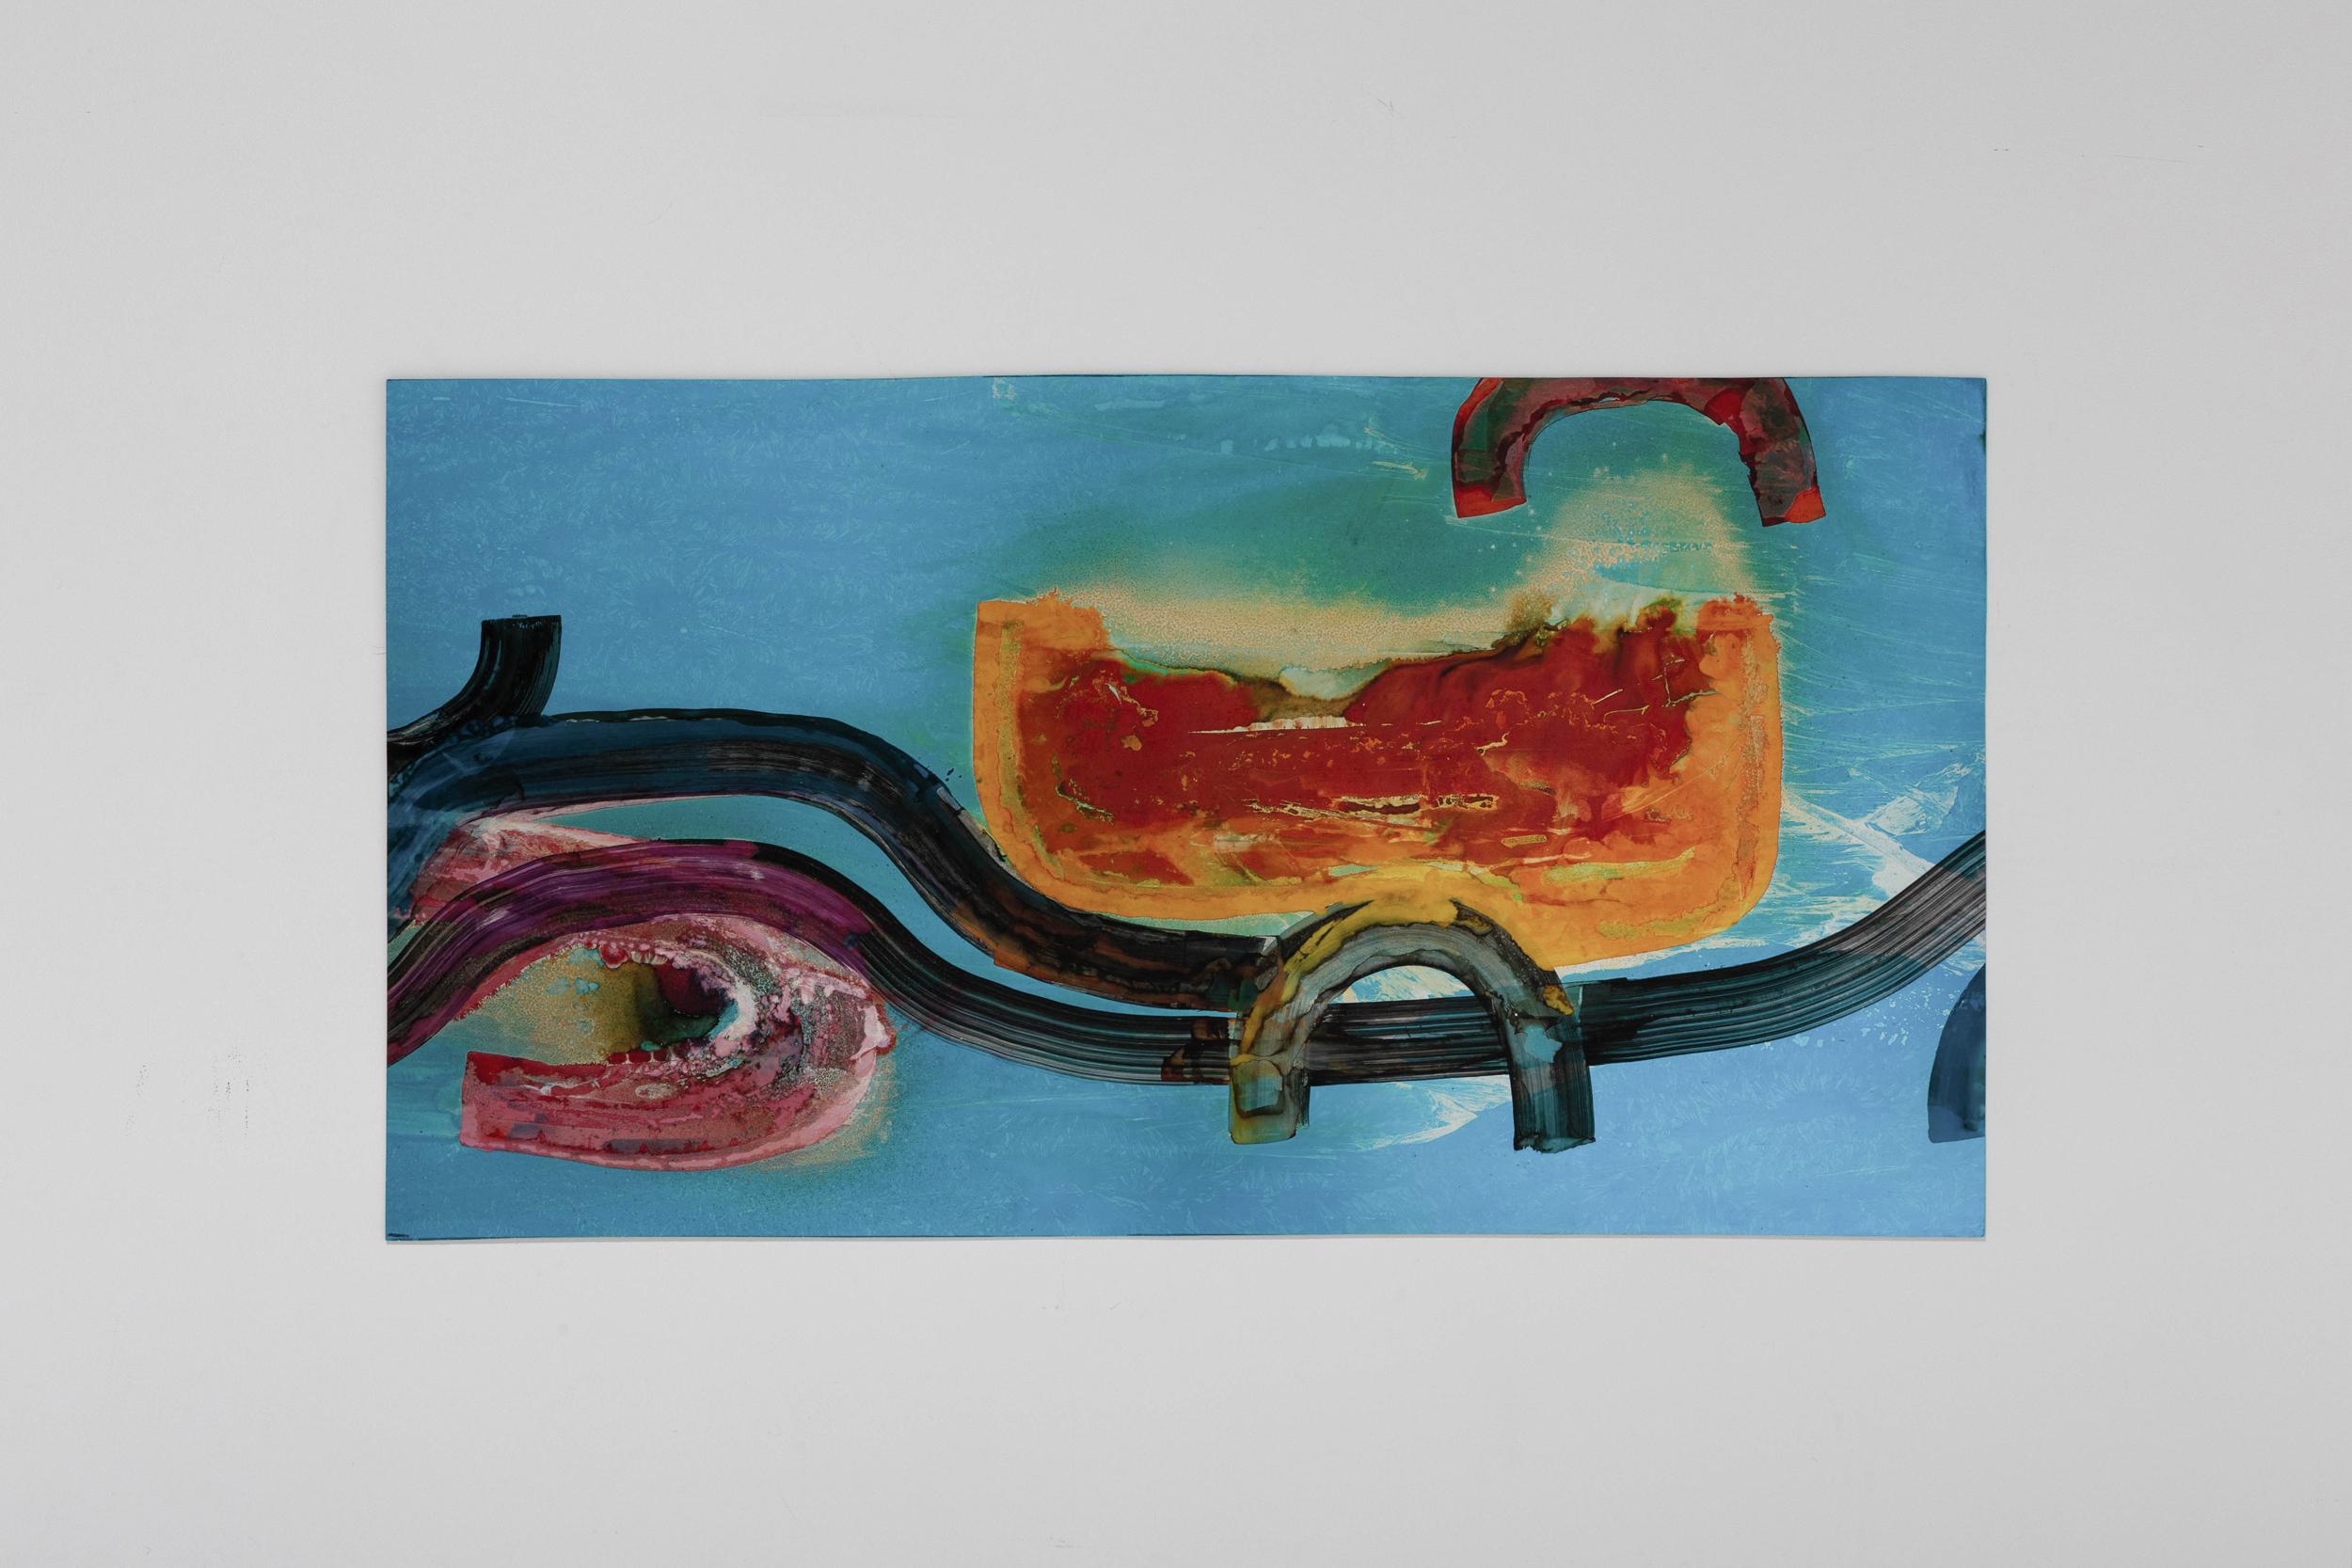 European Artwork by E. Hennekens, Organic Painting on Steel Panel, Abstract Art, 1970's